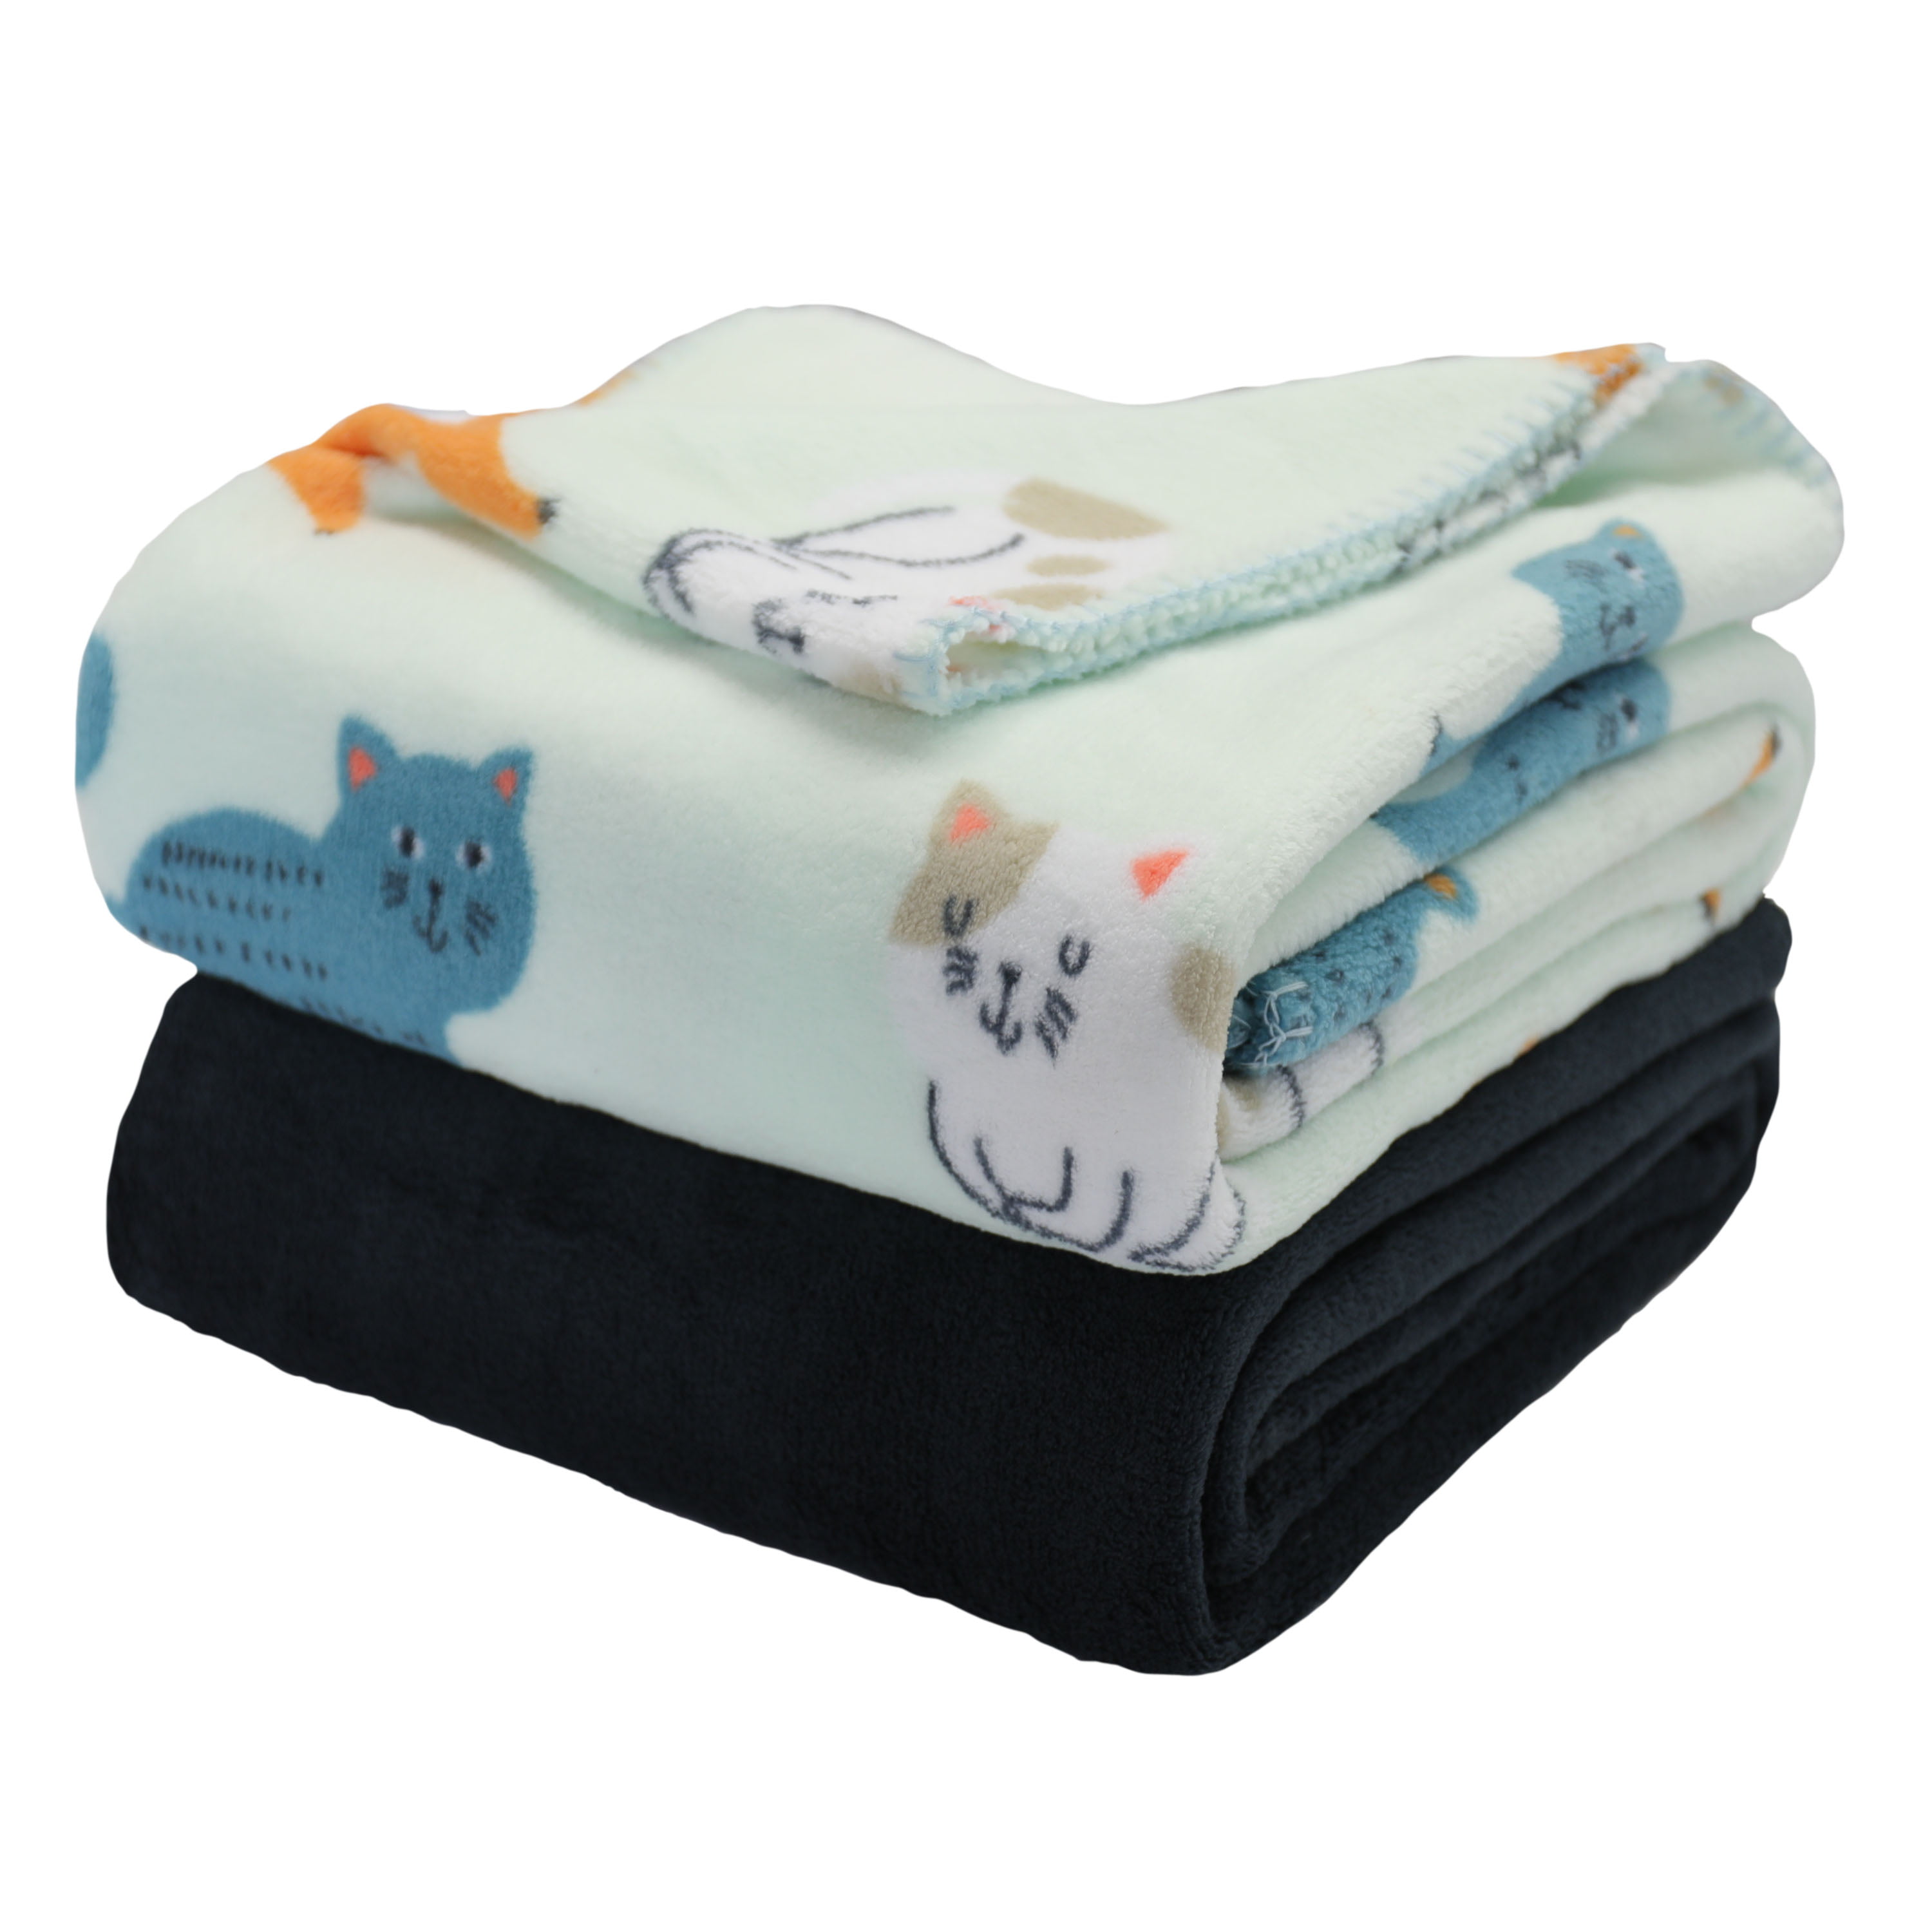 Oarencol Cat Butterfly Throw Blanket Cute Animal Kitten Soft Cozy Flannel Fleece Twin Blankets for Bed Sofa Couch 60x90